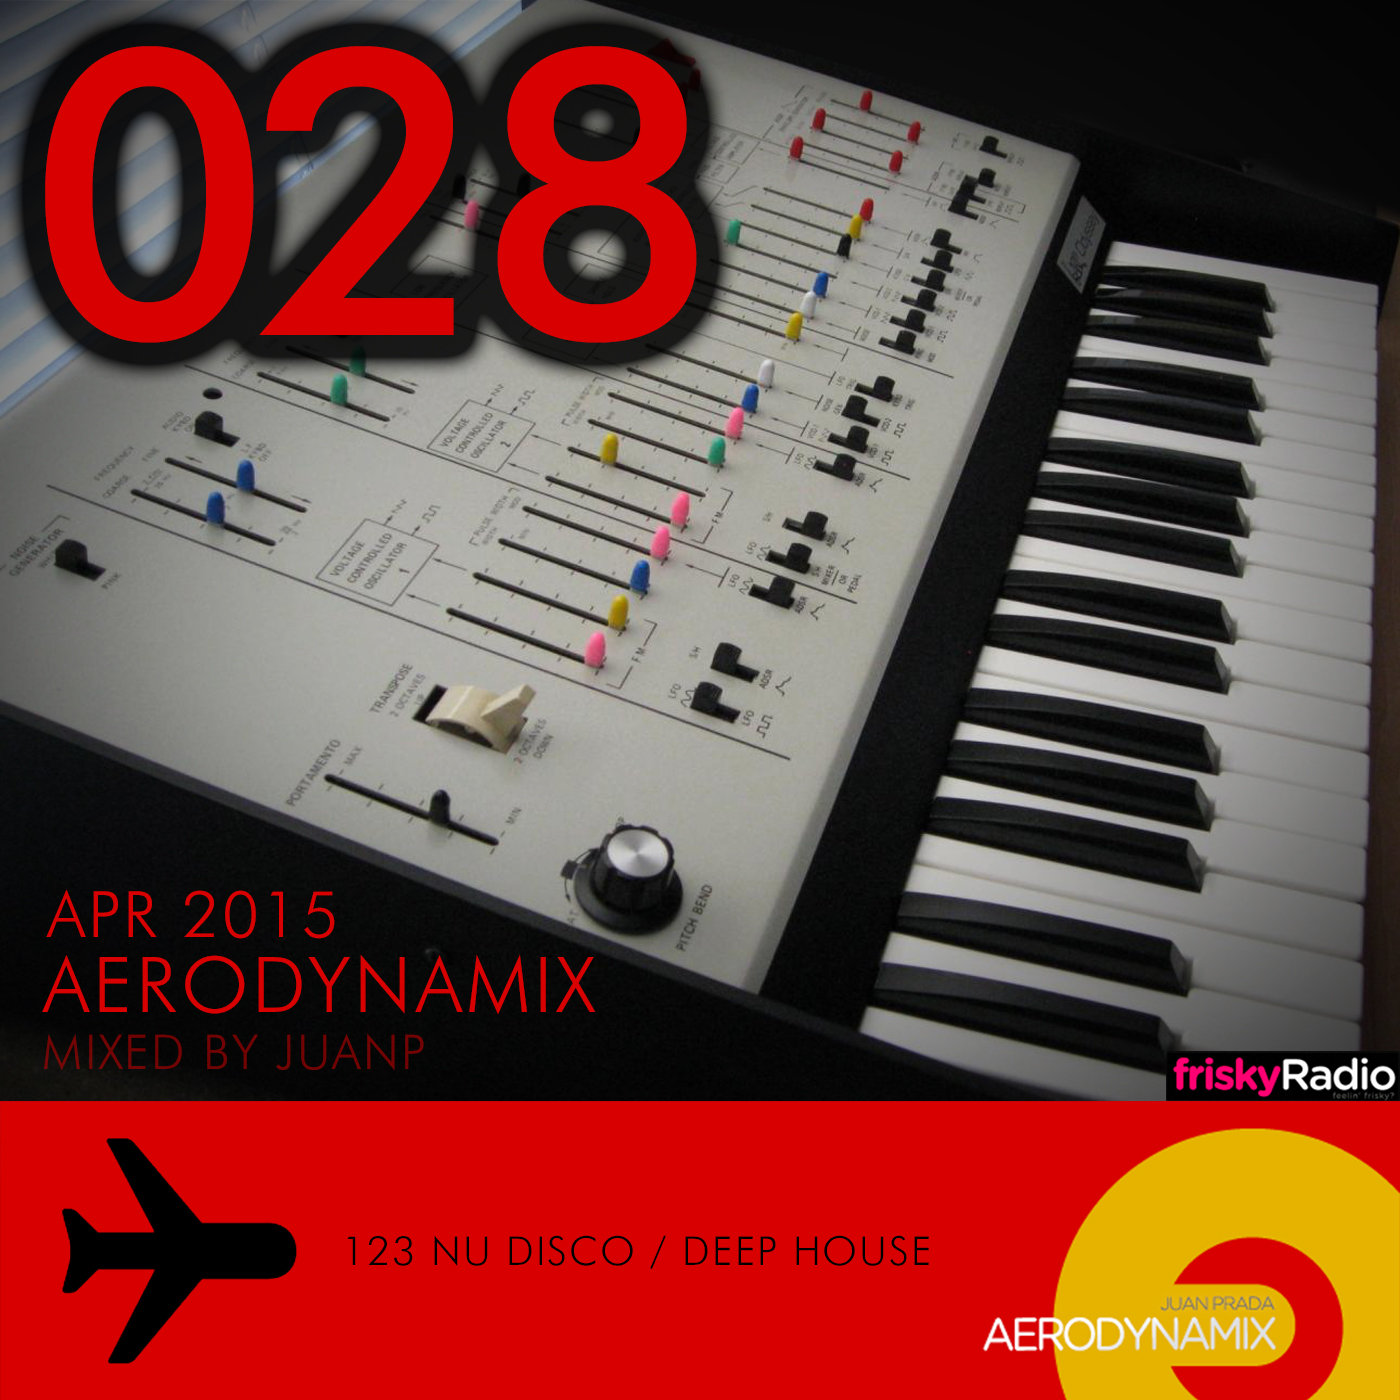 Aerodynamix 028 @ Frisky Radio April 2015 mixed by JuanP